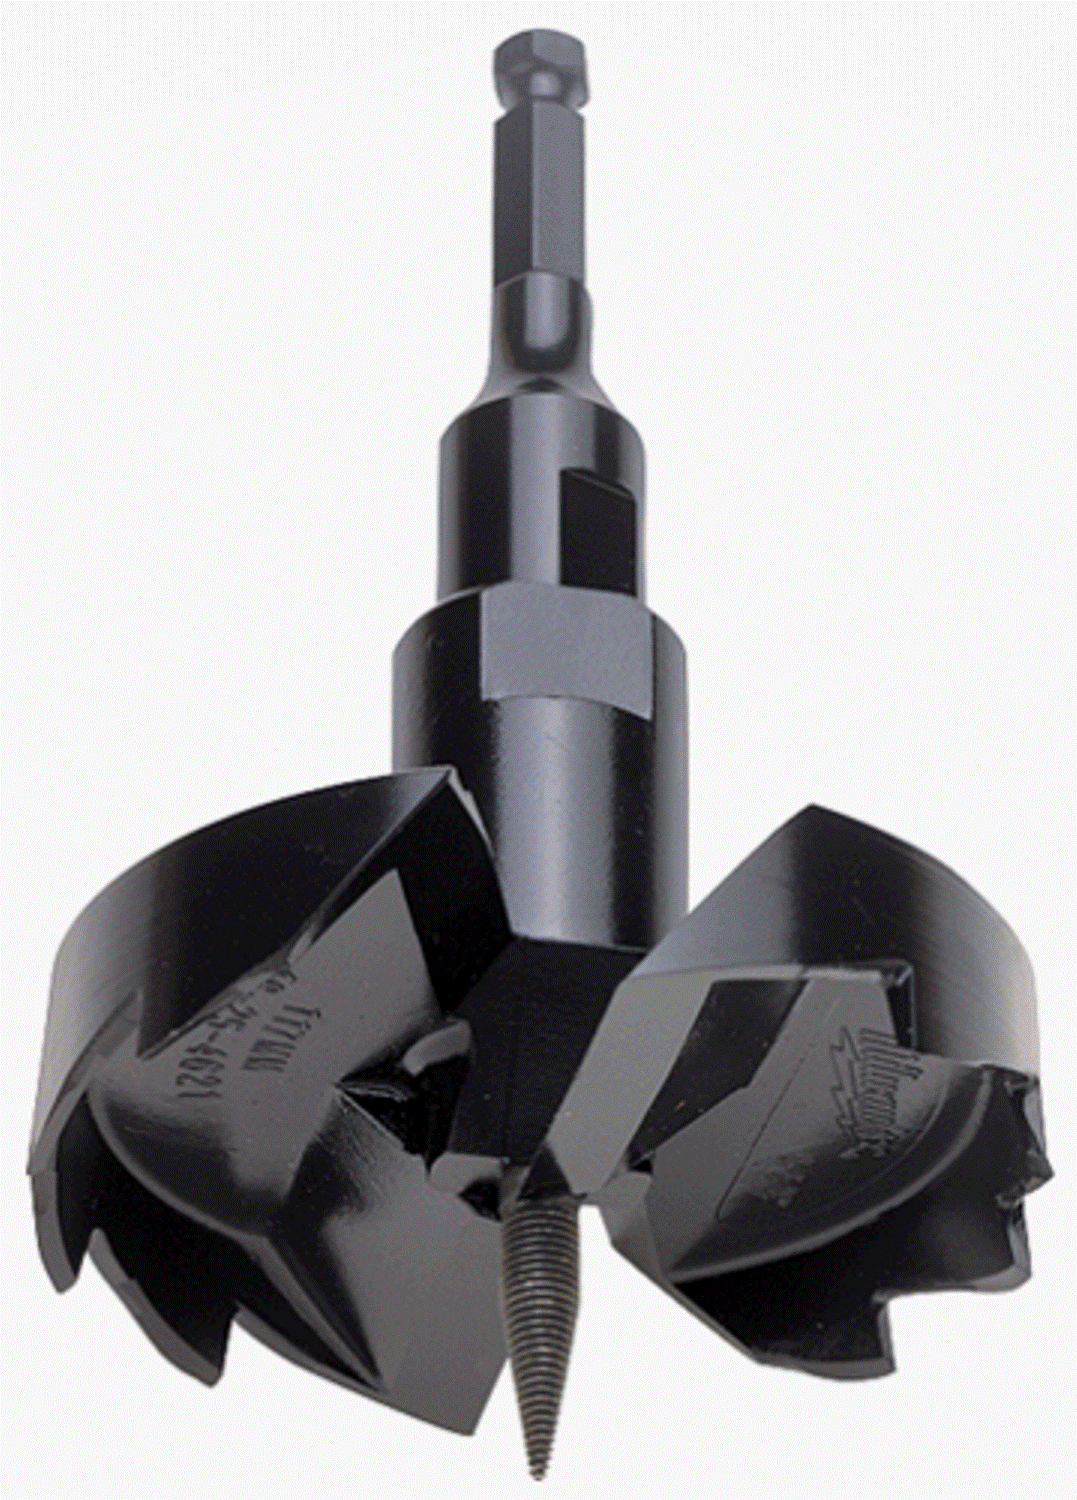 MILWAUKEE ELEC Tool 48-25-1502 Self Feed Bit 1-1/2 Standard Plumbing Supply 